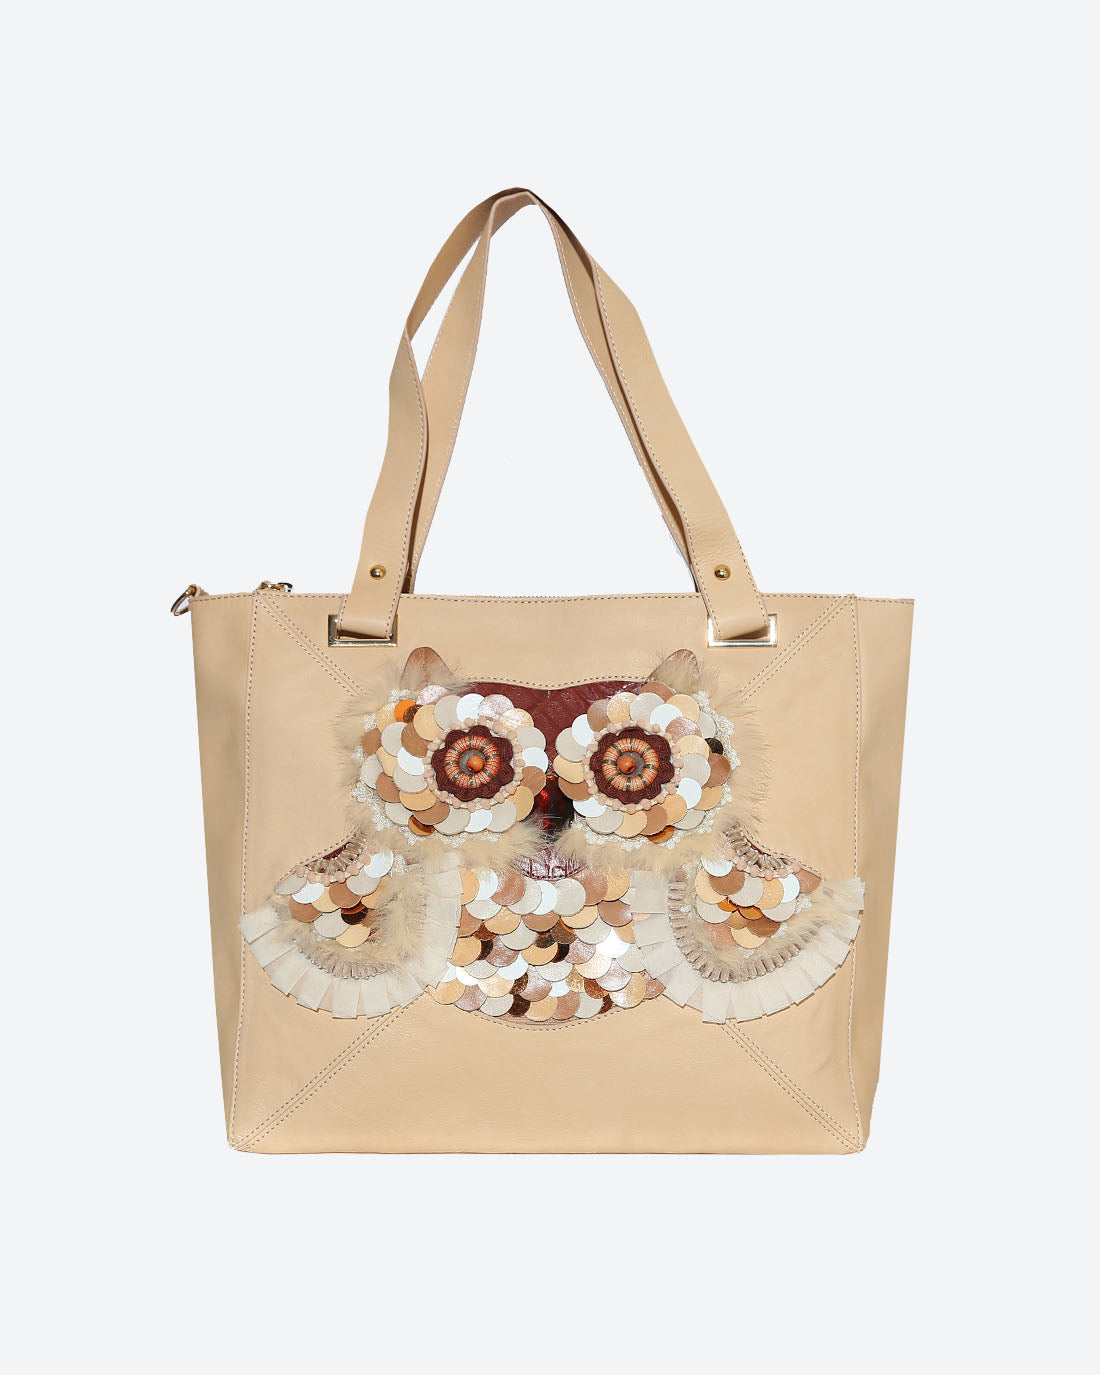 OWL: Applique Tote Bag